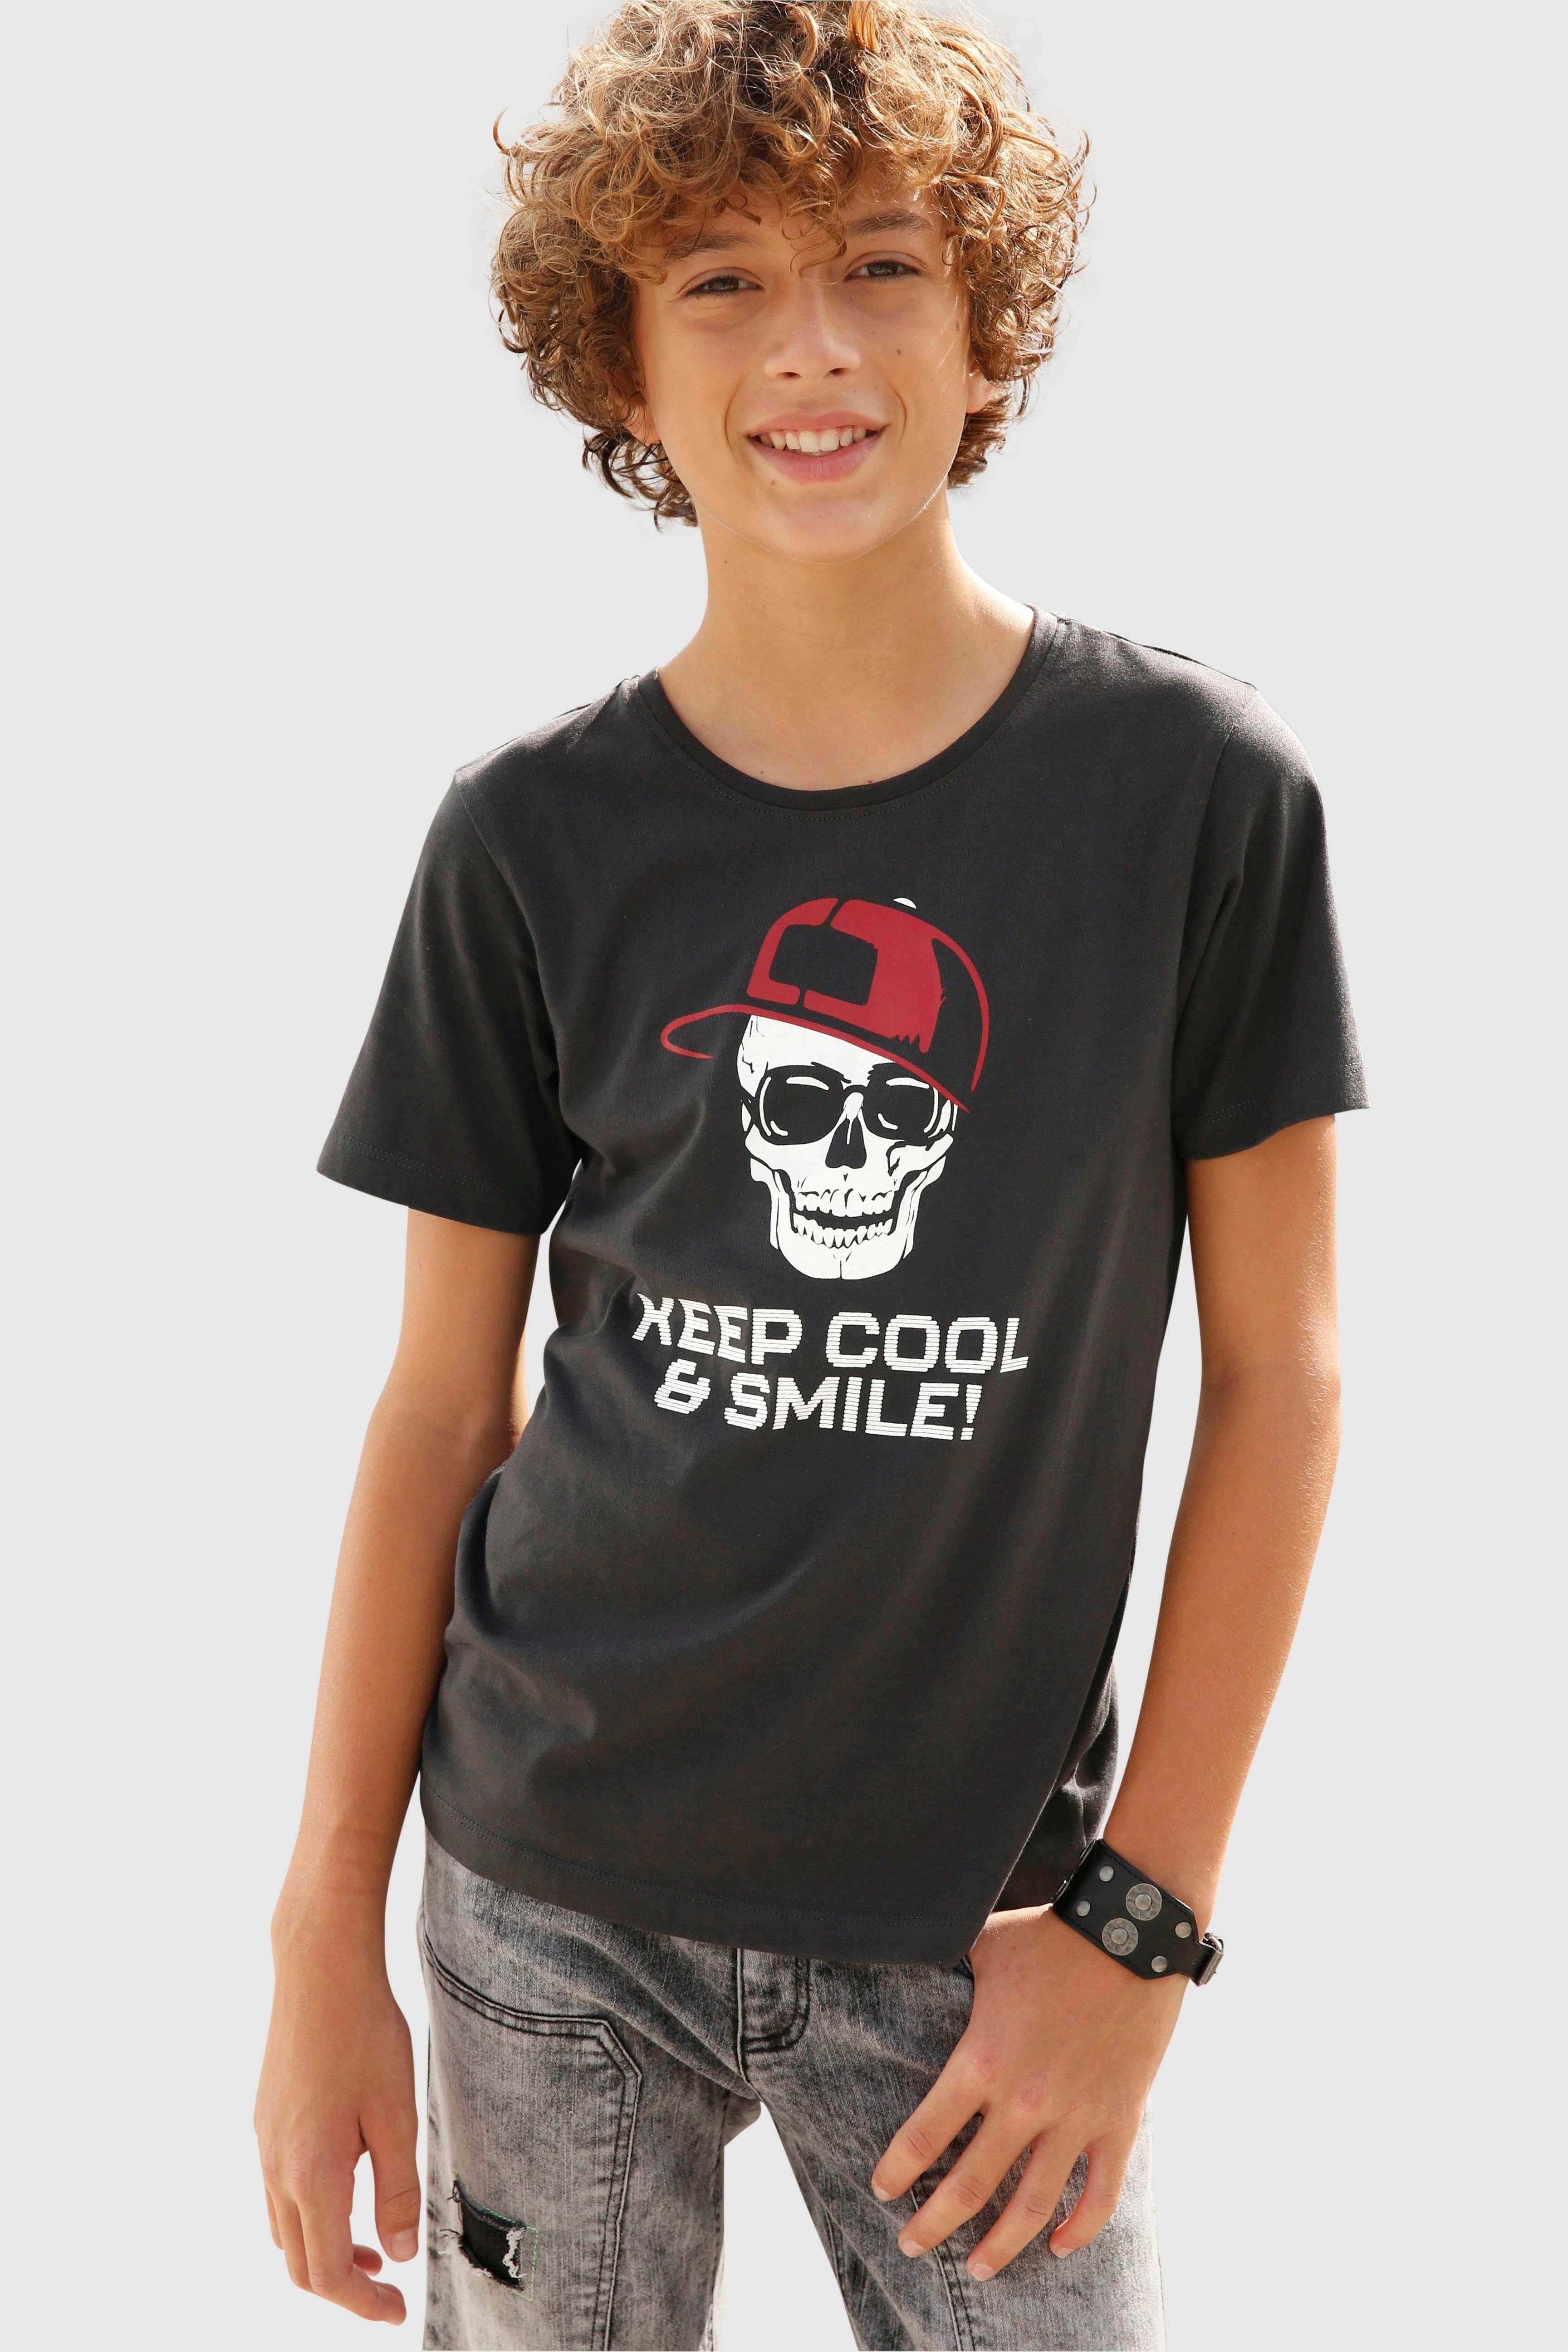 COOL..., T-Shirt KIDSWORLD Spruch KEEP